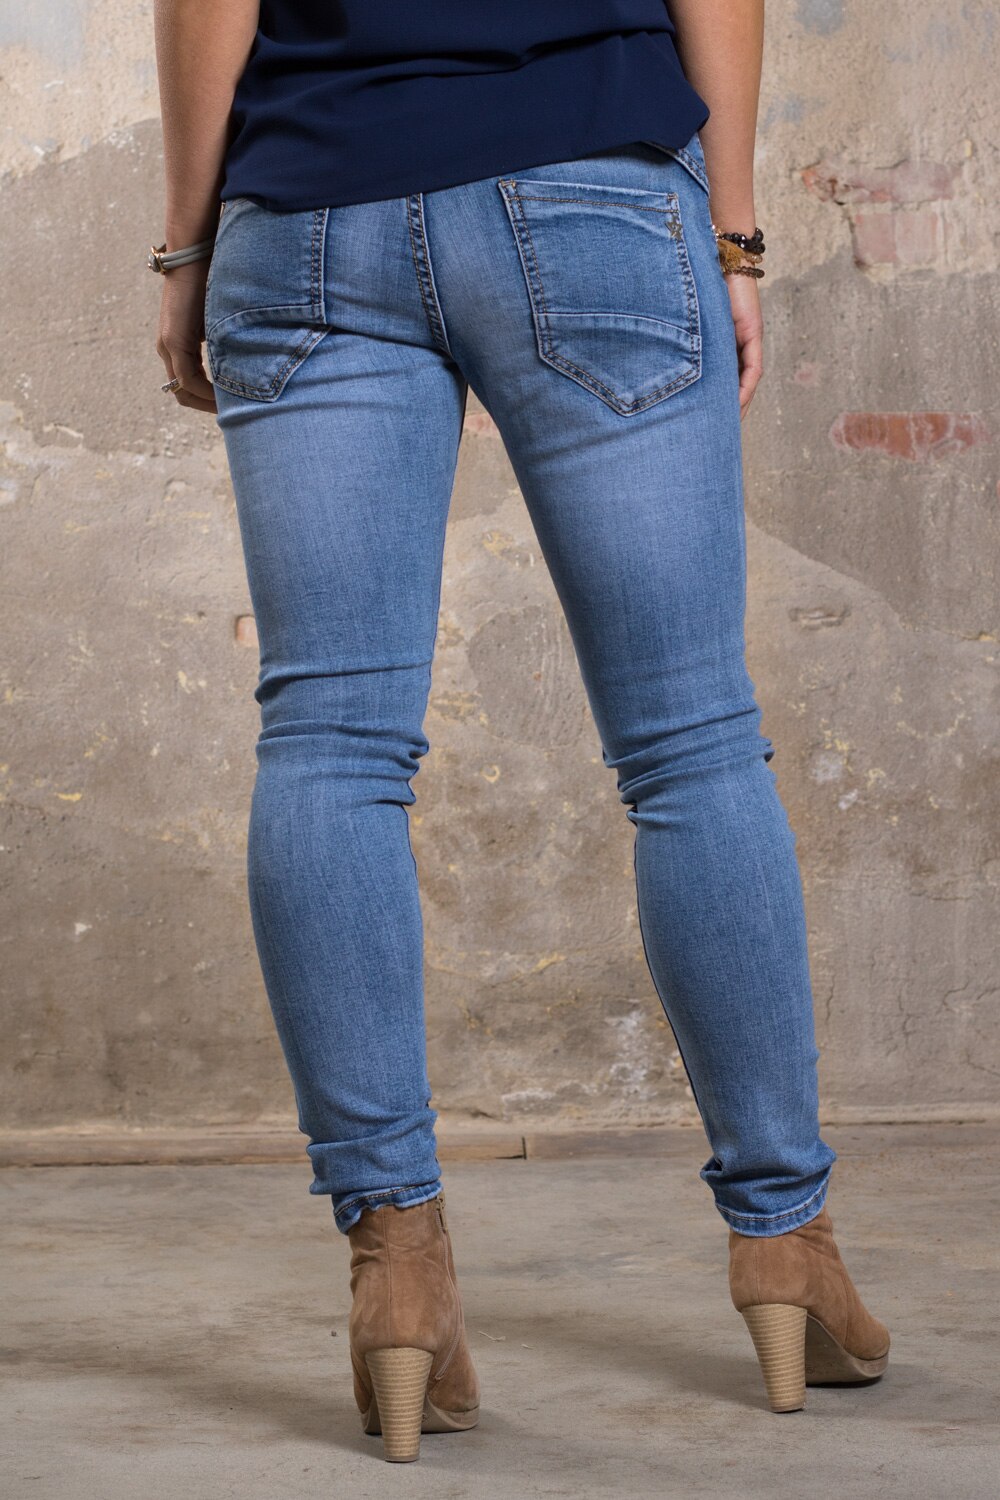 Jeans-L8017-med-Bling-ljustvatt-bak